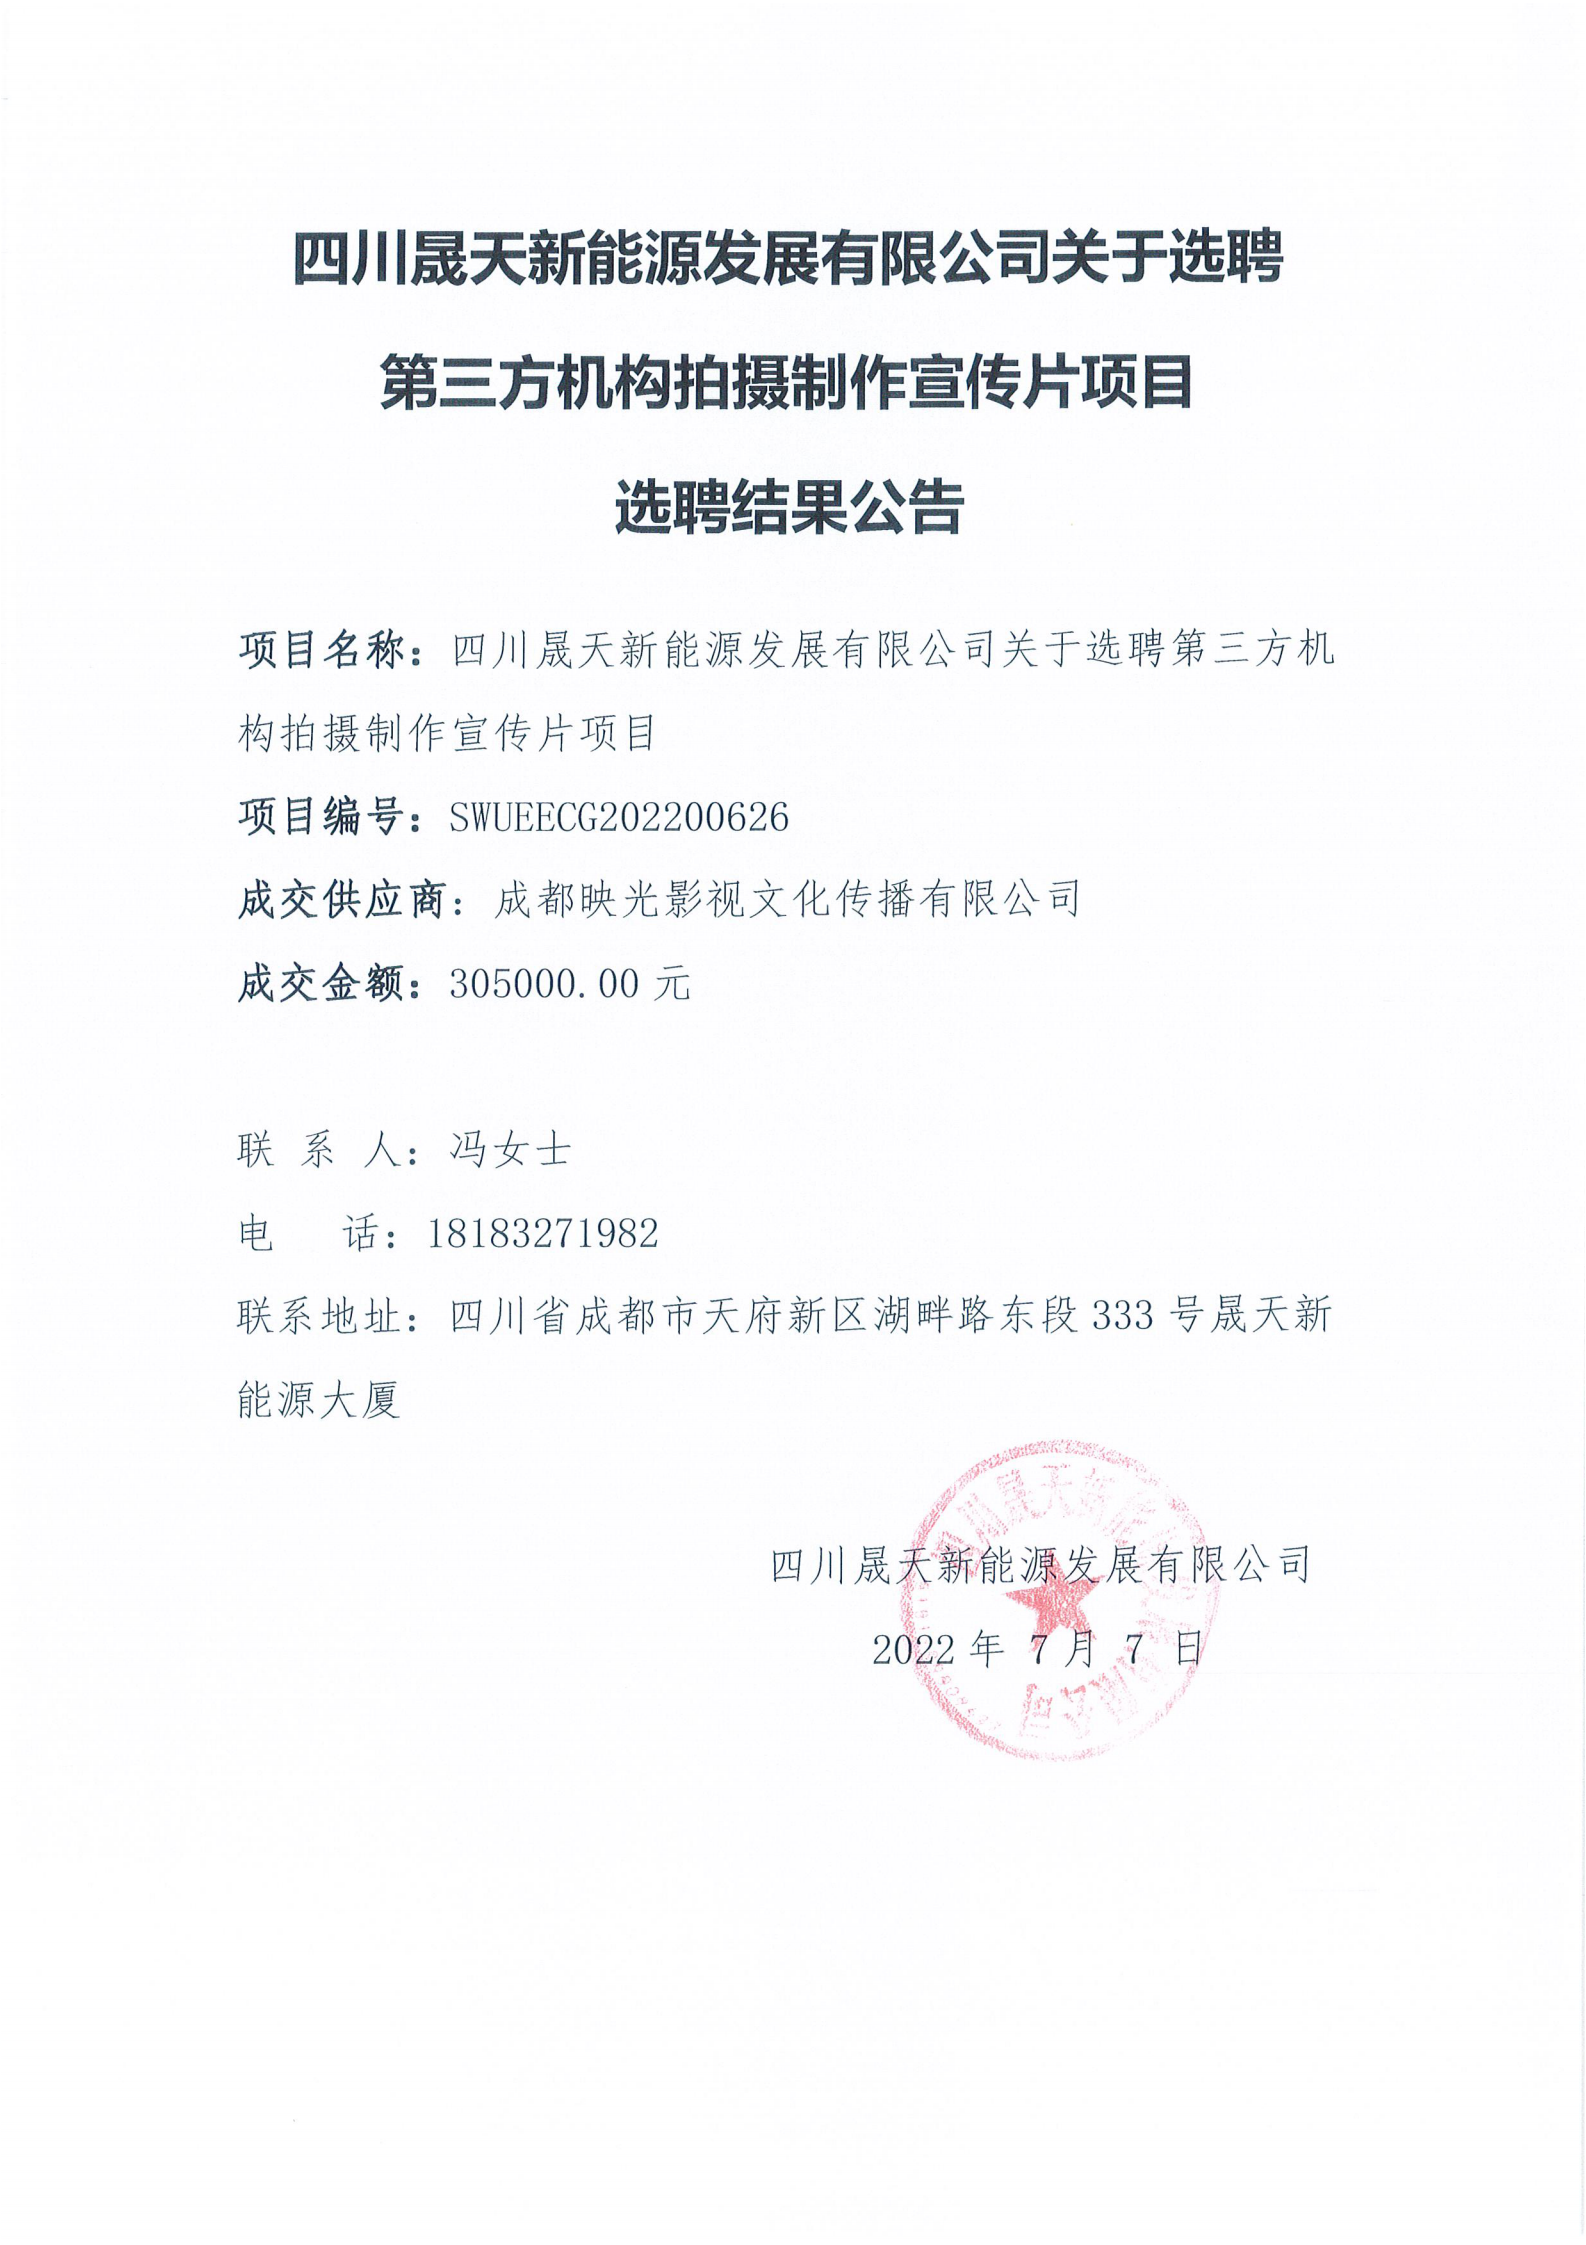 leyu乐鱼体育APP官方网站关于选聘第三方机构拍摄制作宣传片项目选聘结果公告_00.png